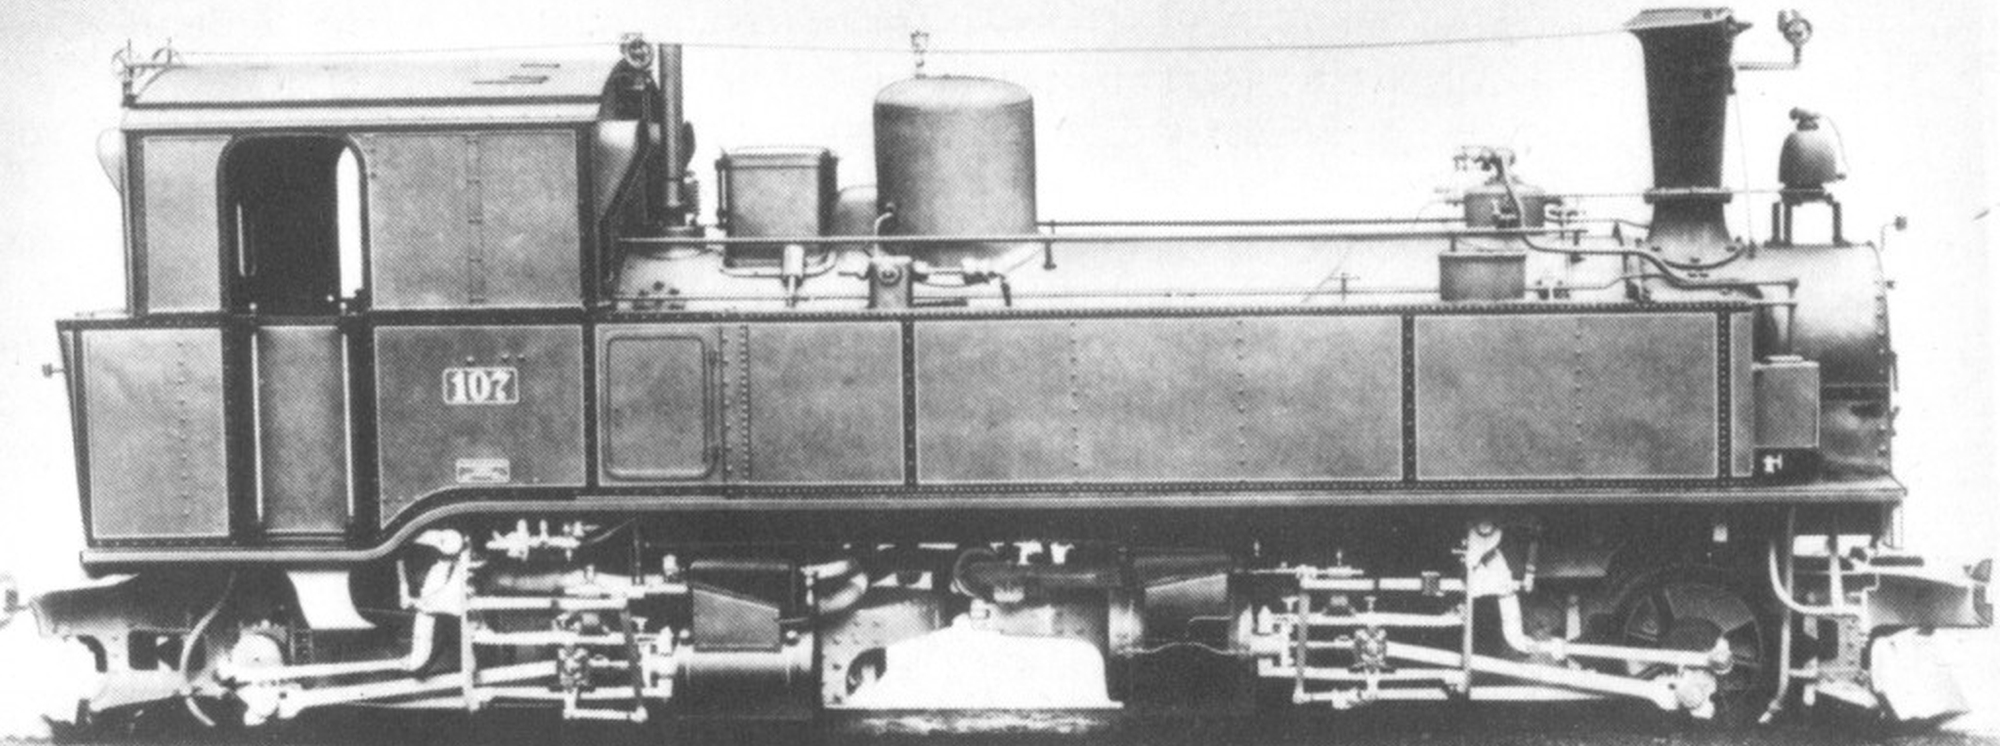 No. 107, the fifth machine built, on a Hartmann factory photo